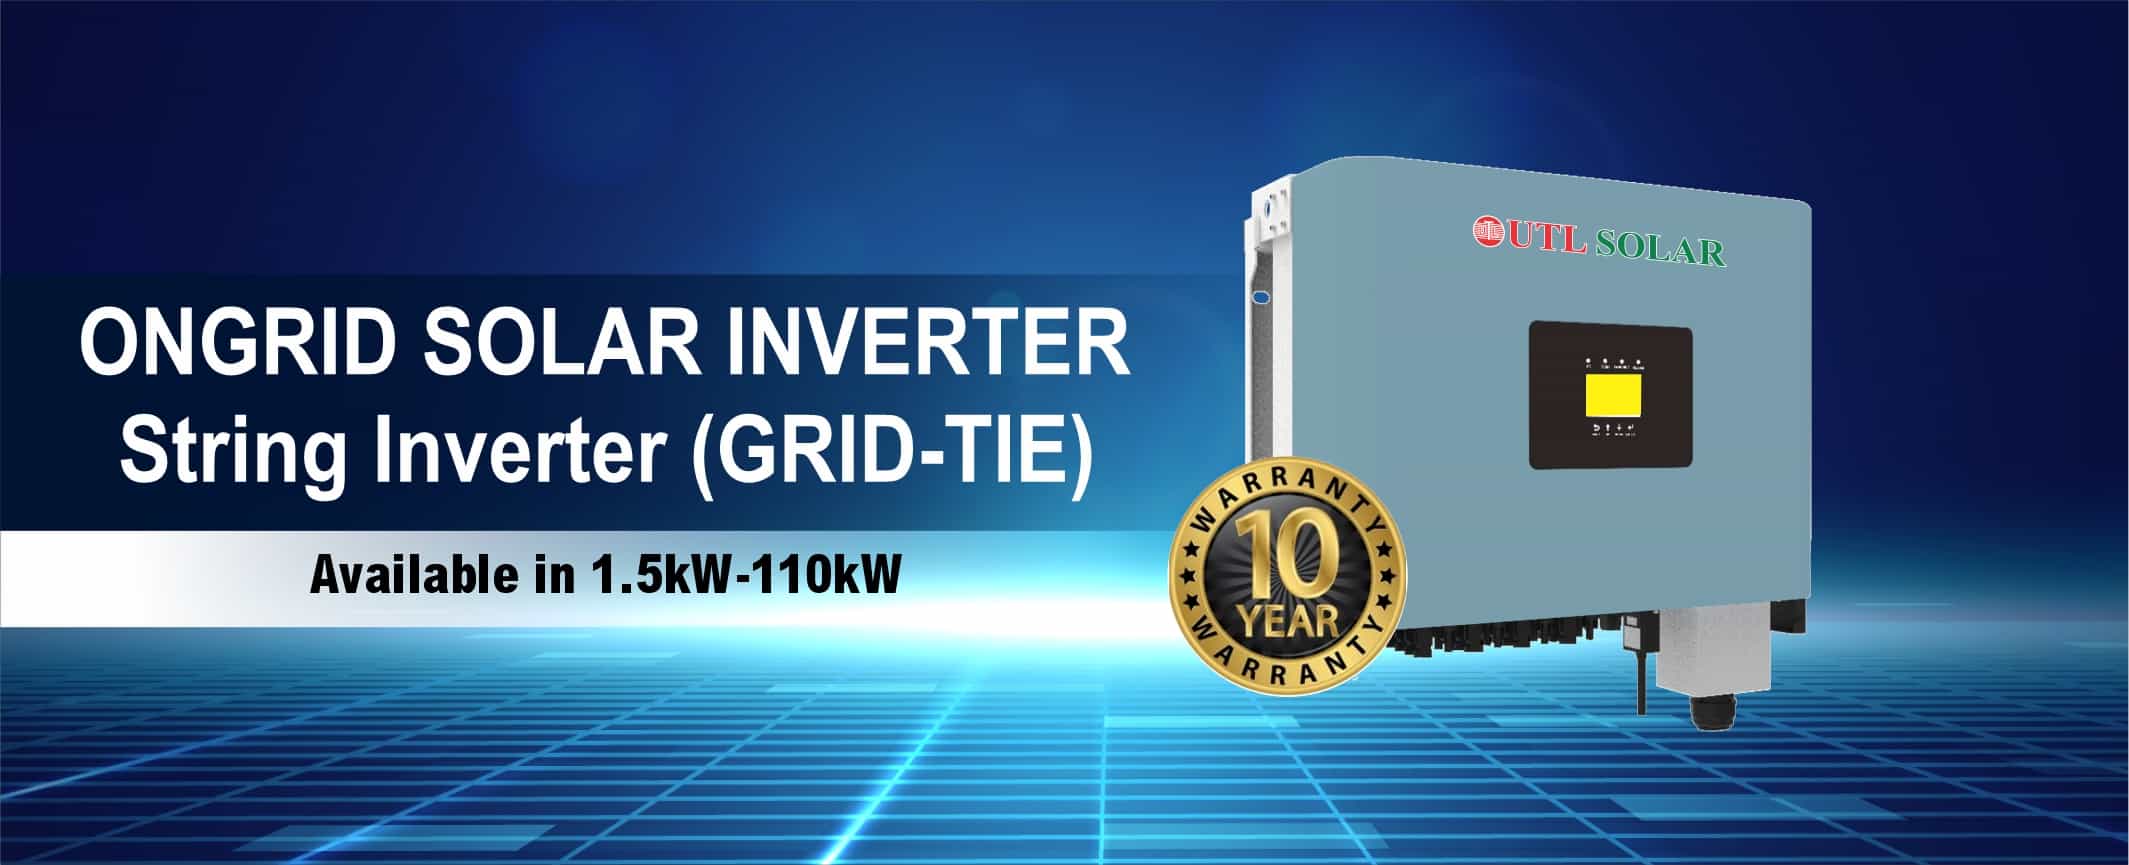 UTL On-Grid Solar Inverter